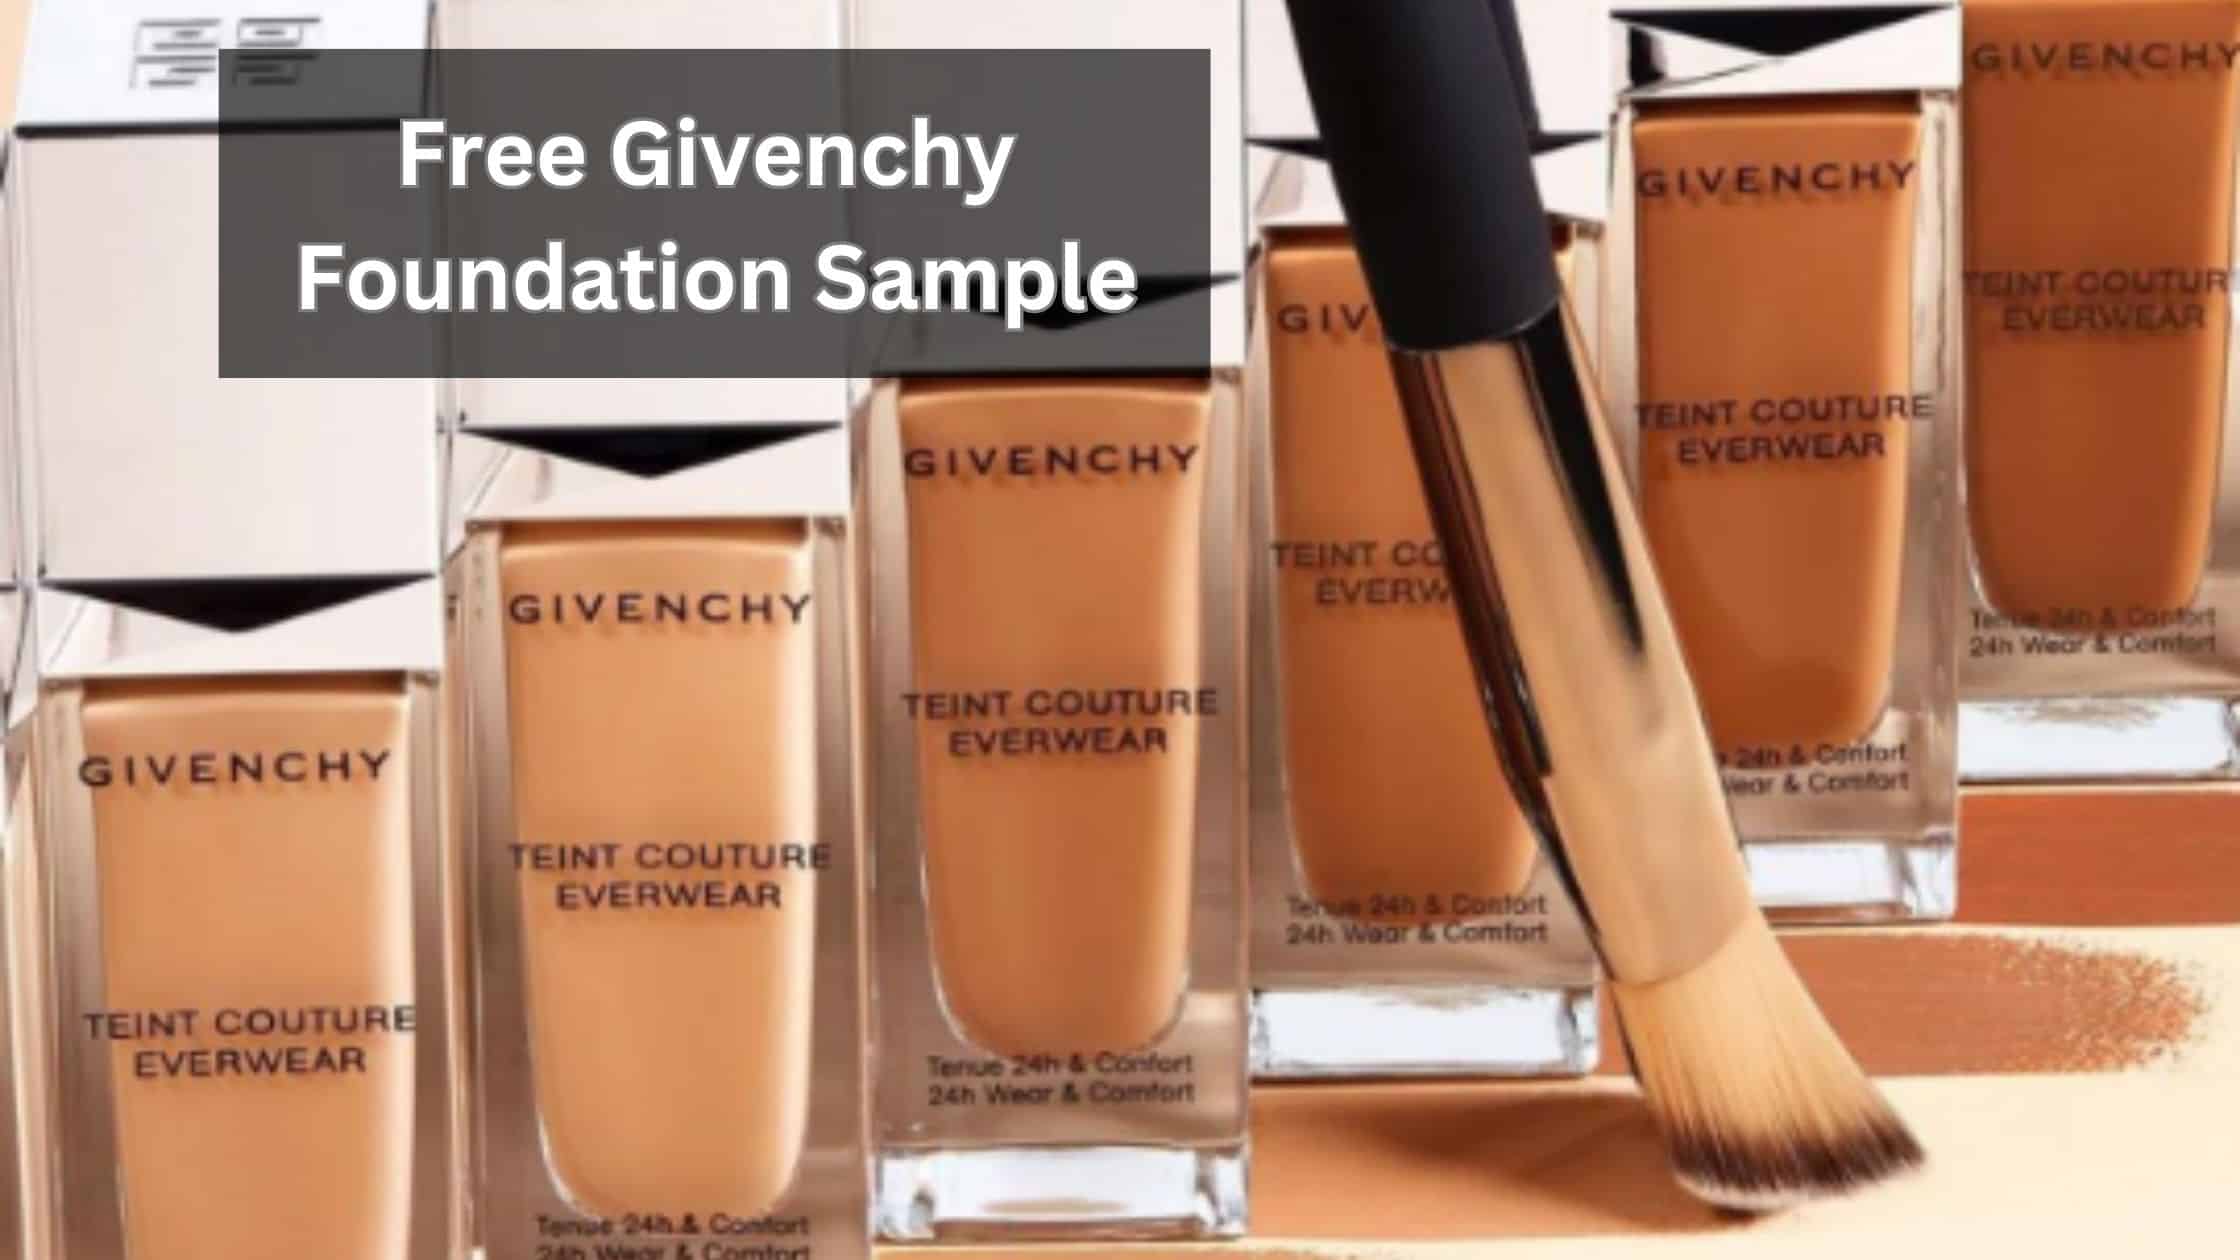 Free Givenchy Foundation Sample